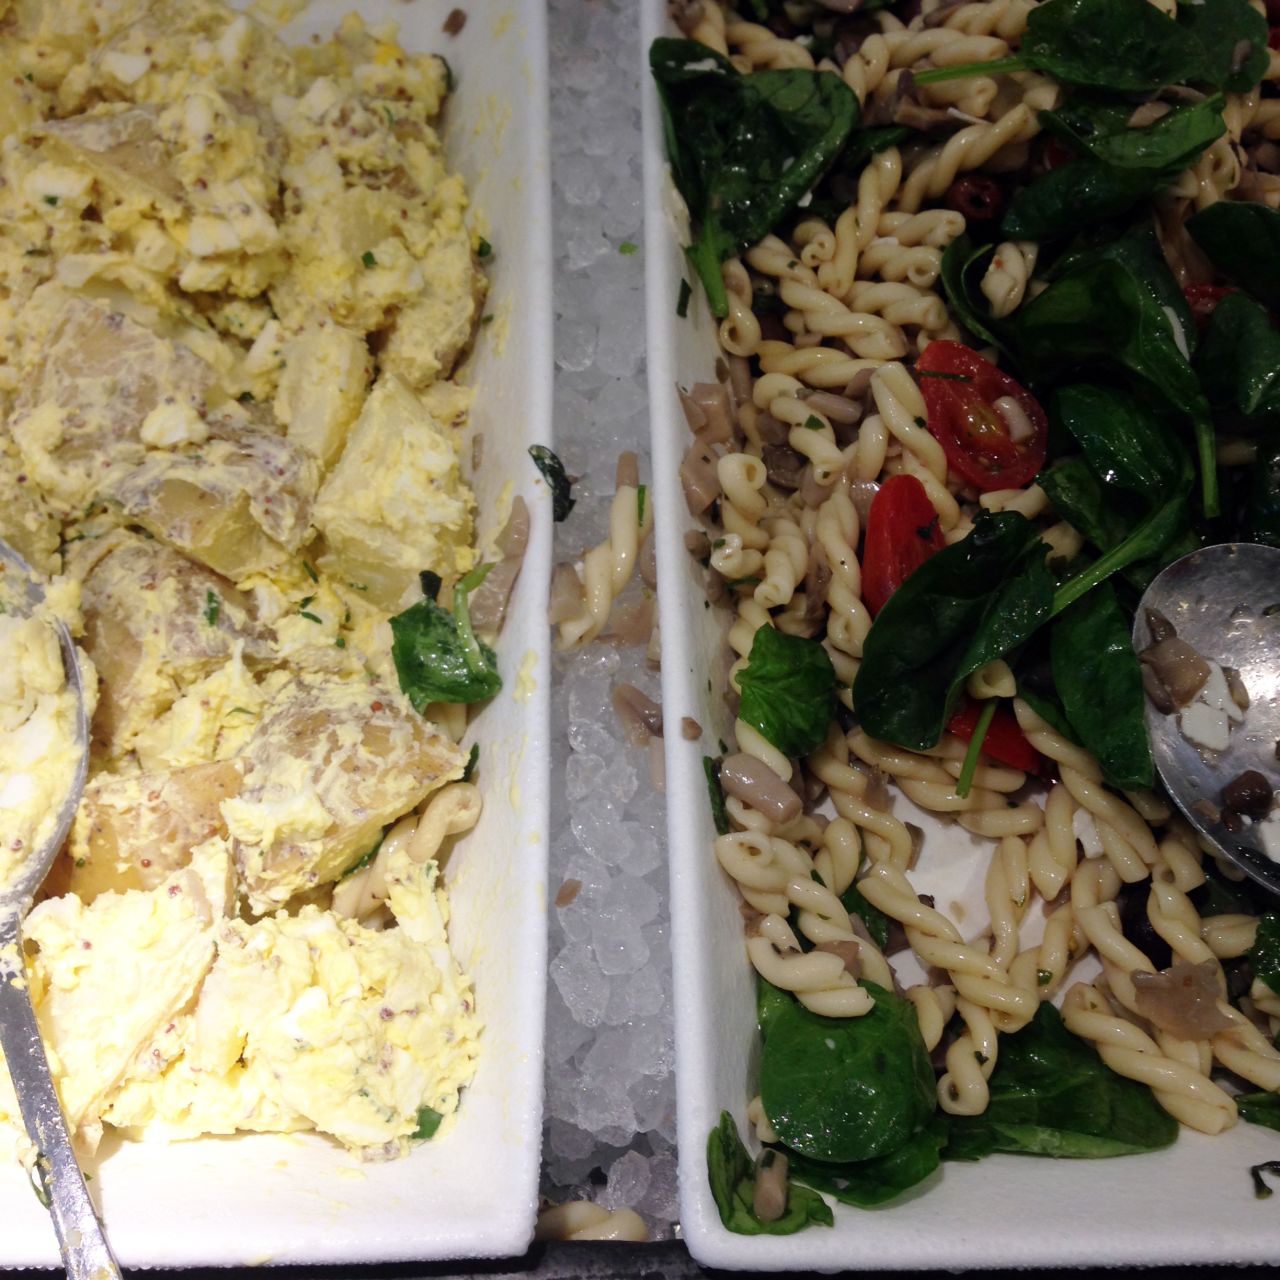 Time Warner Center's Park Cafe, New York: Potato salad and pasta salad, side by side